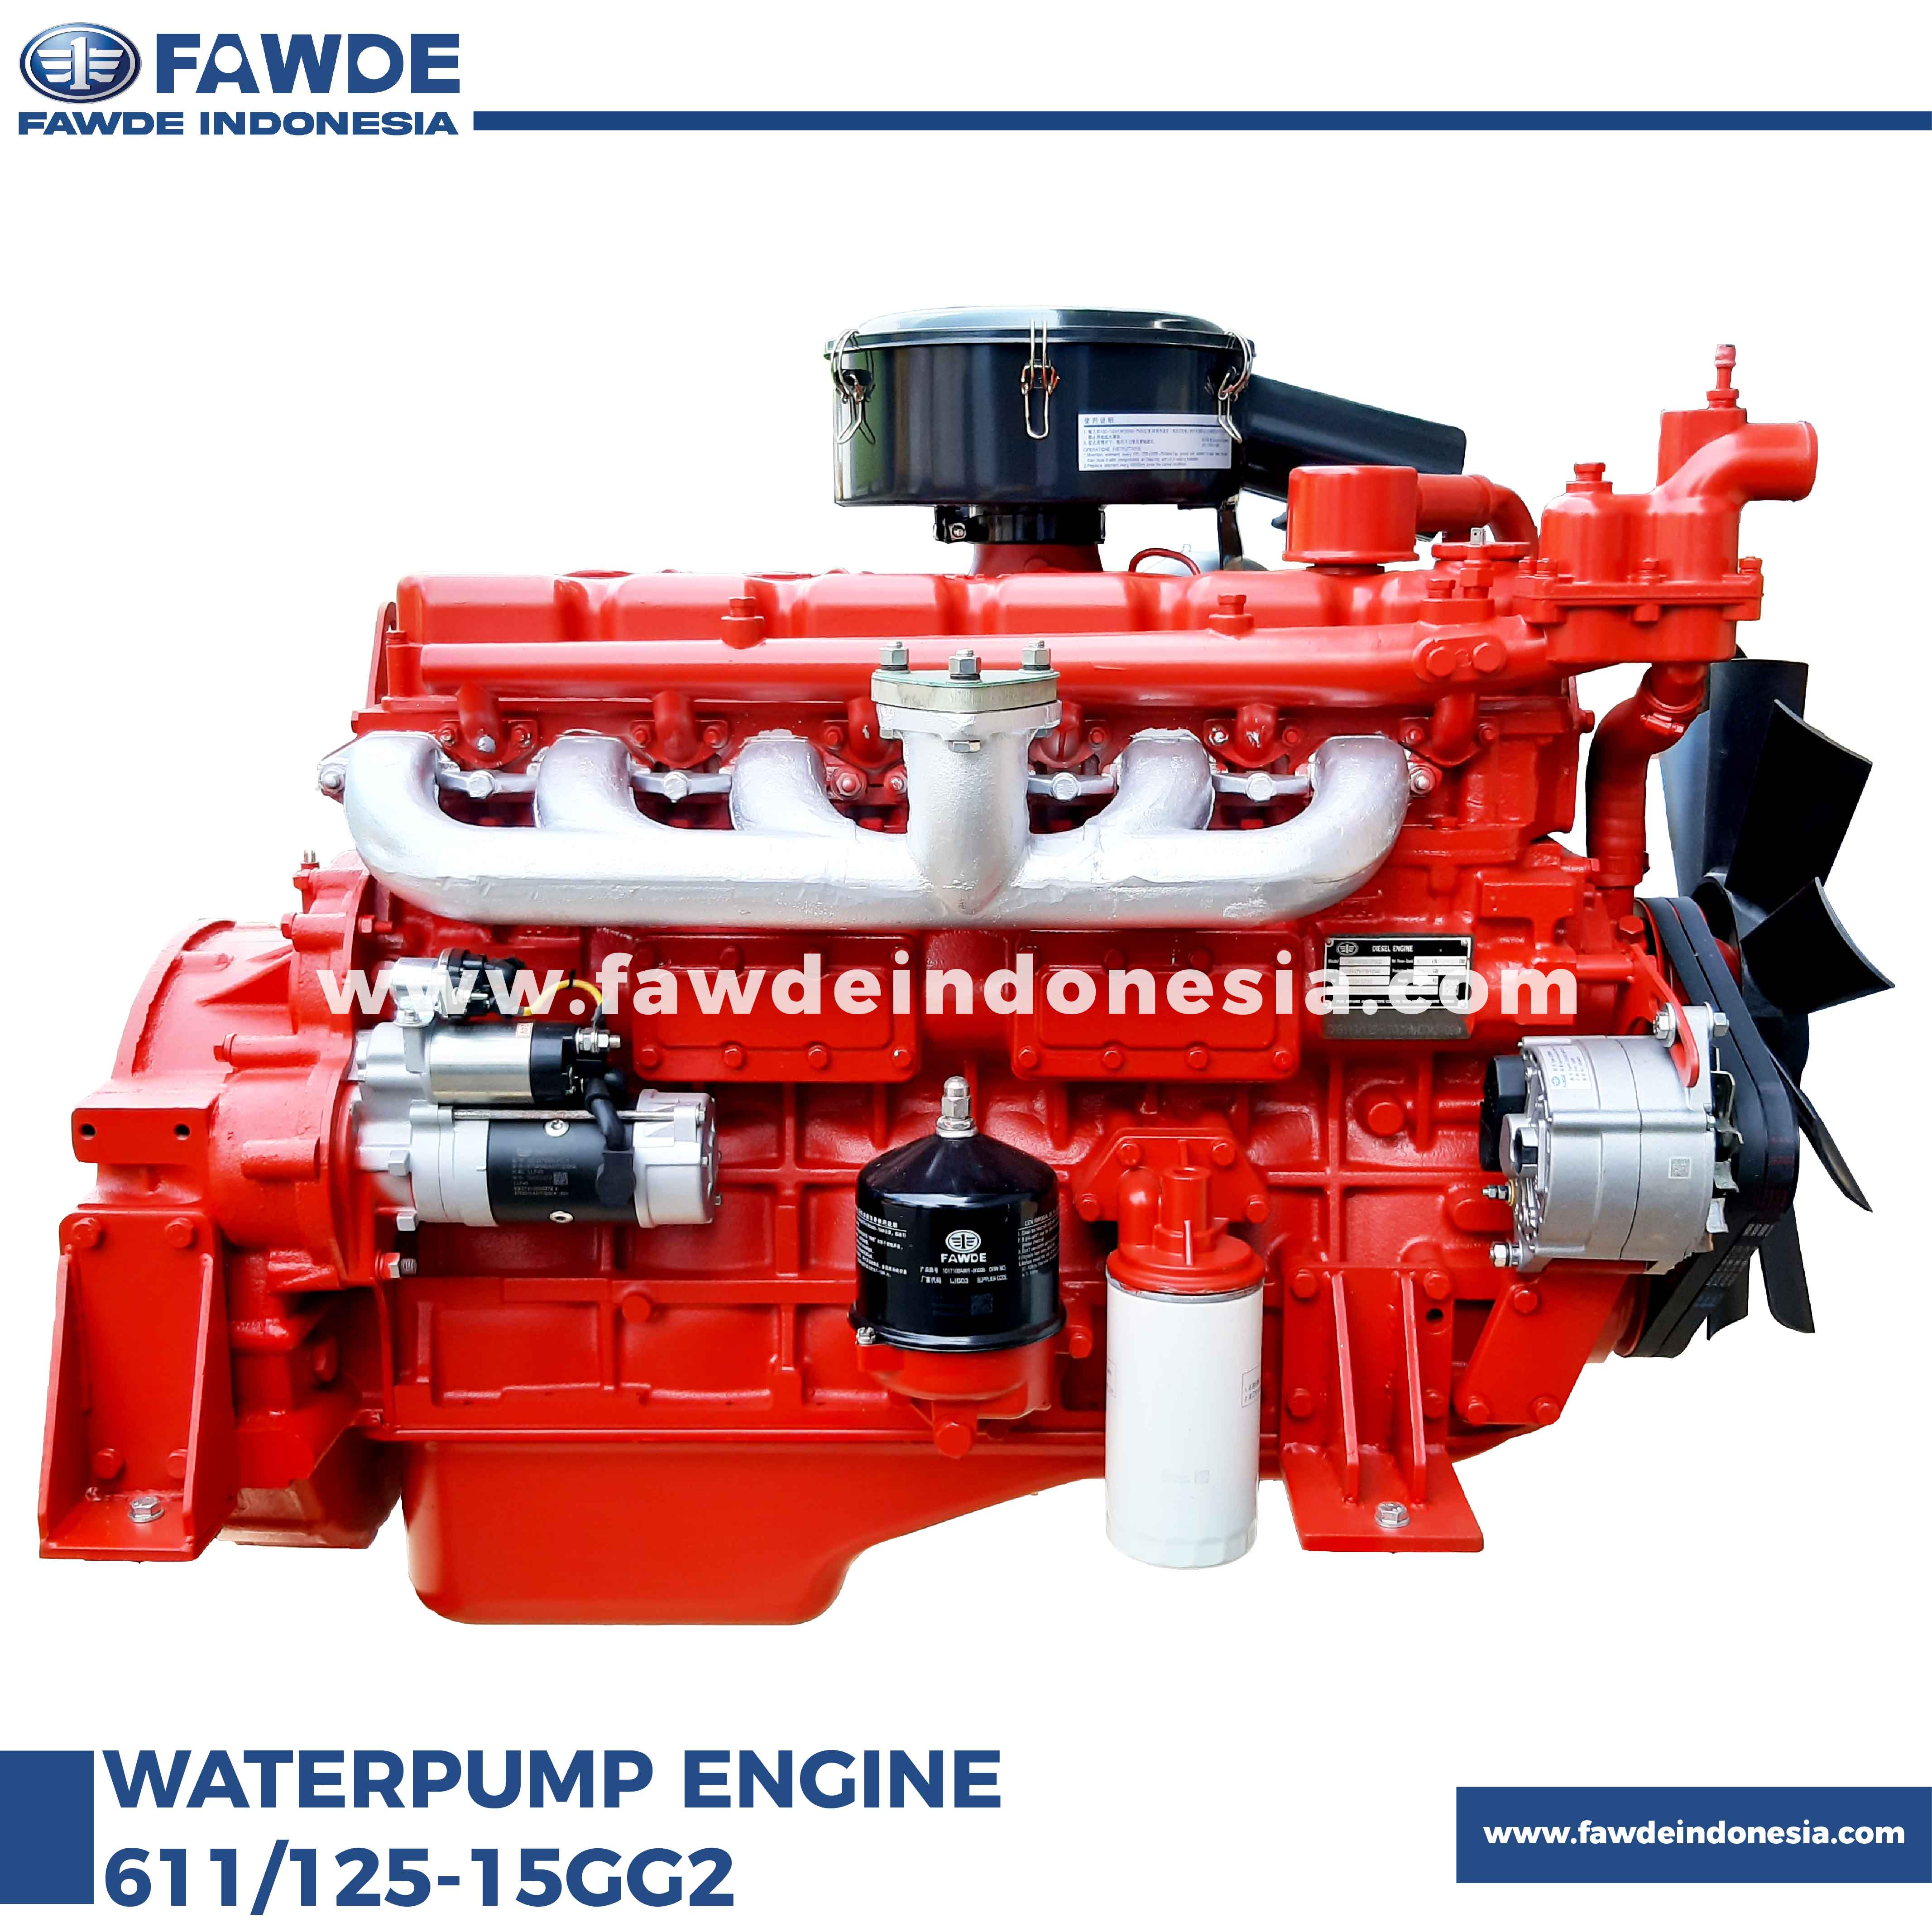 waterpump engine 611-125-15gg2_3